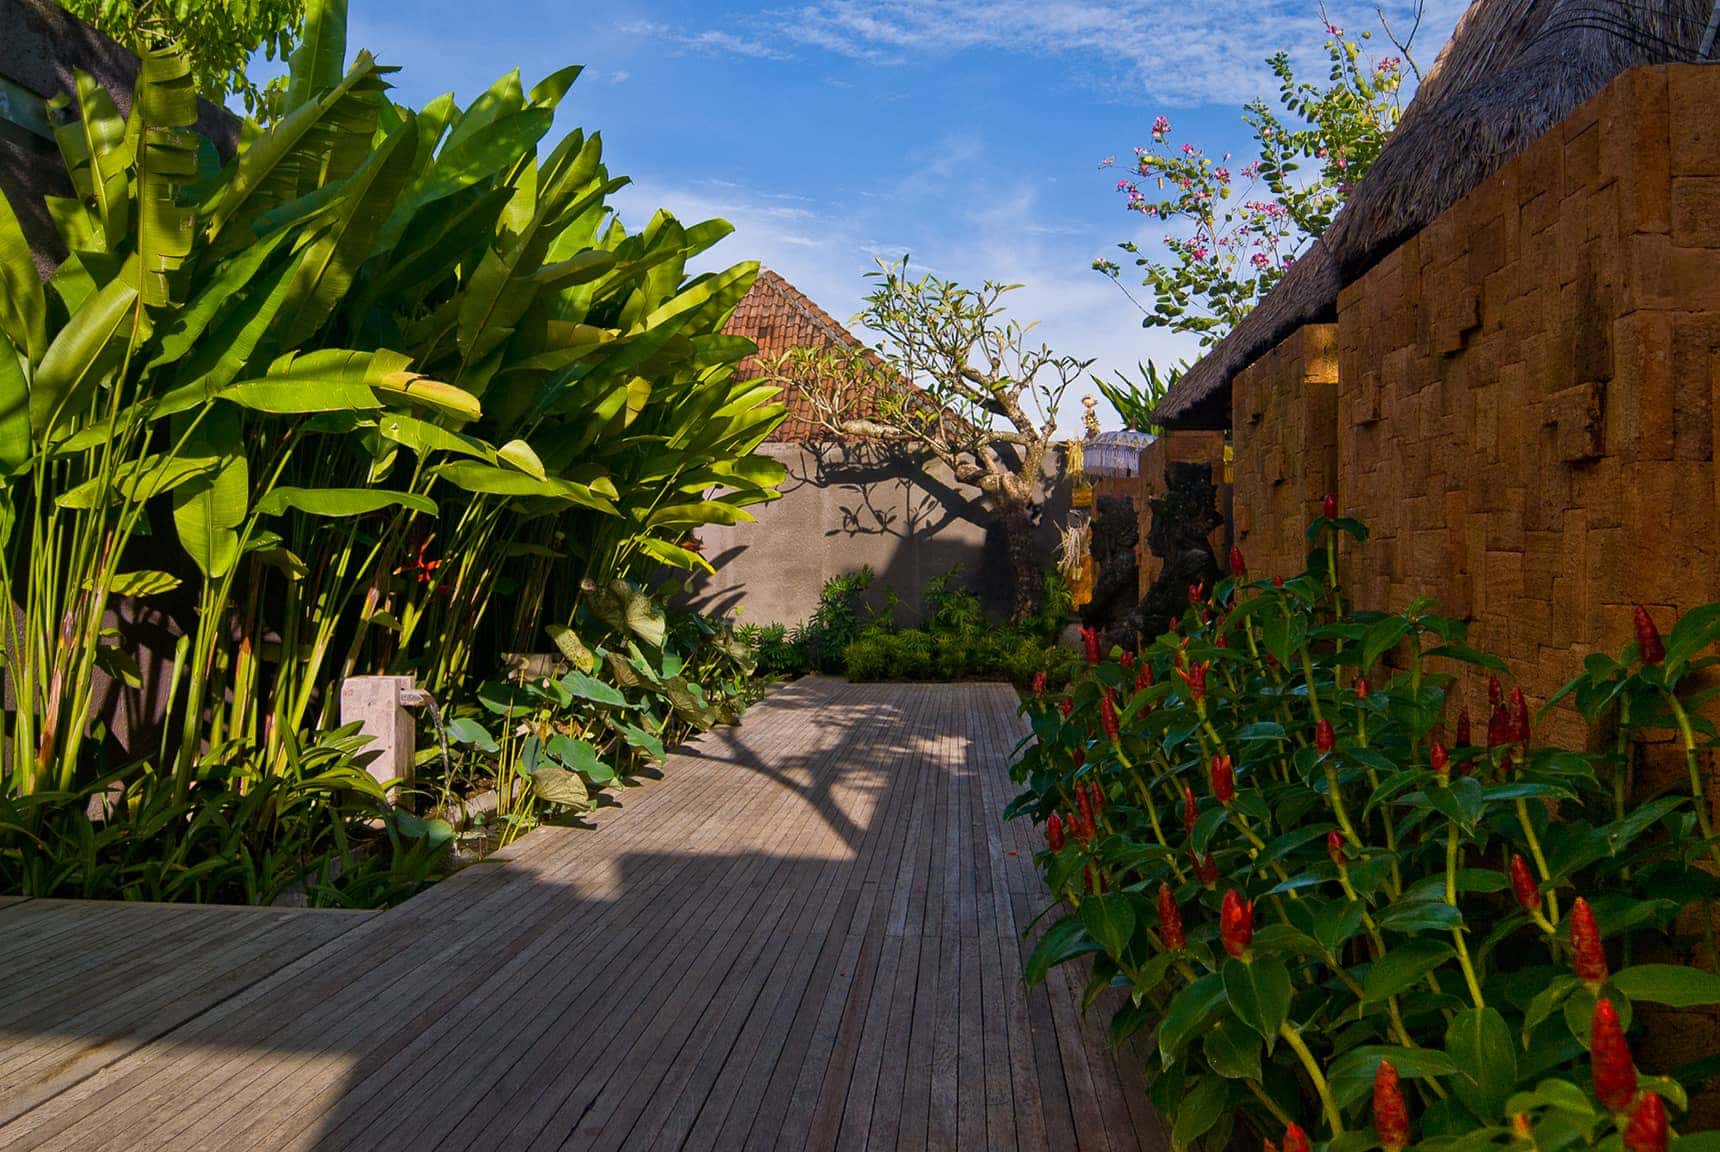 Komea Villas - Umalas, Bali Indonesia (Bali villa photography by master photographer Rick Carmichael of LuxViz)